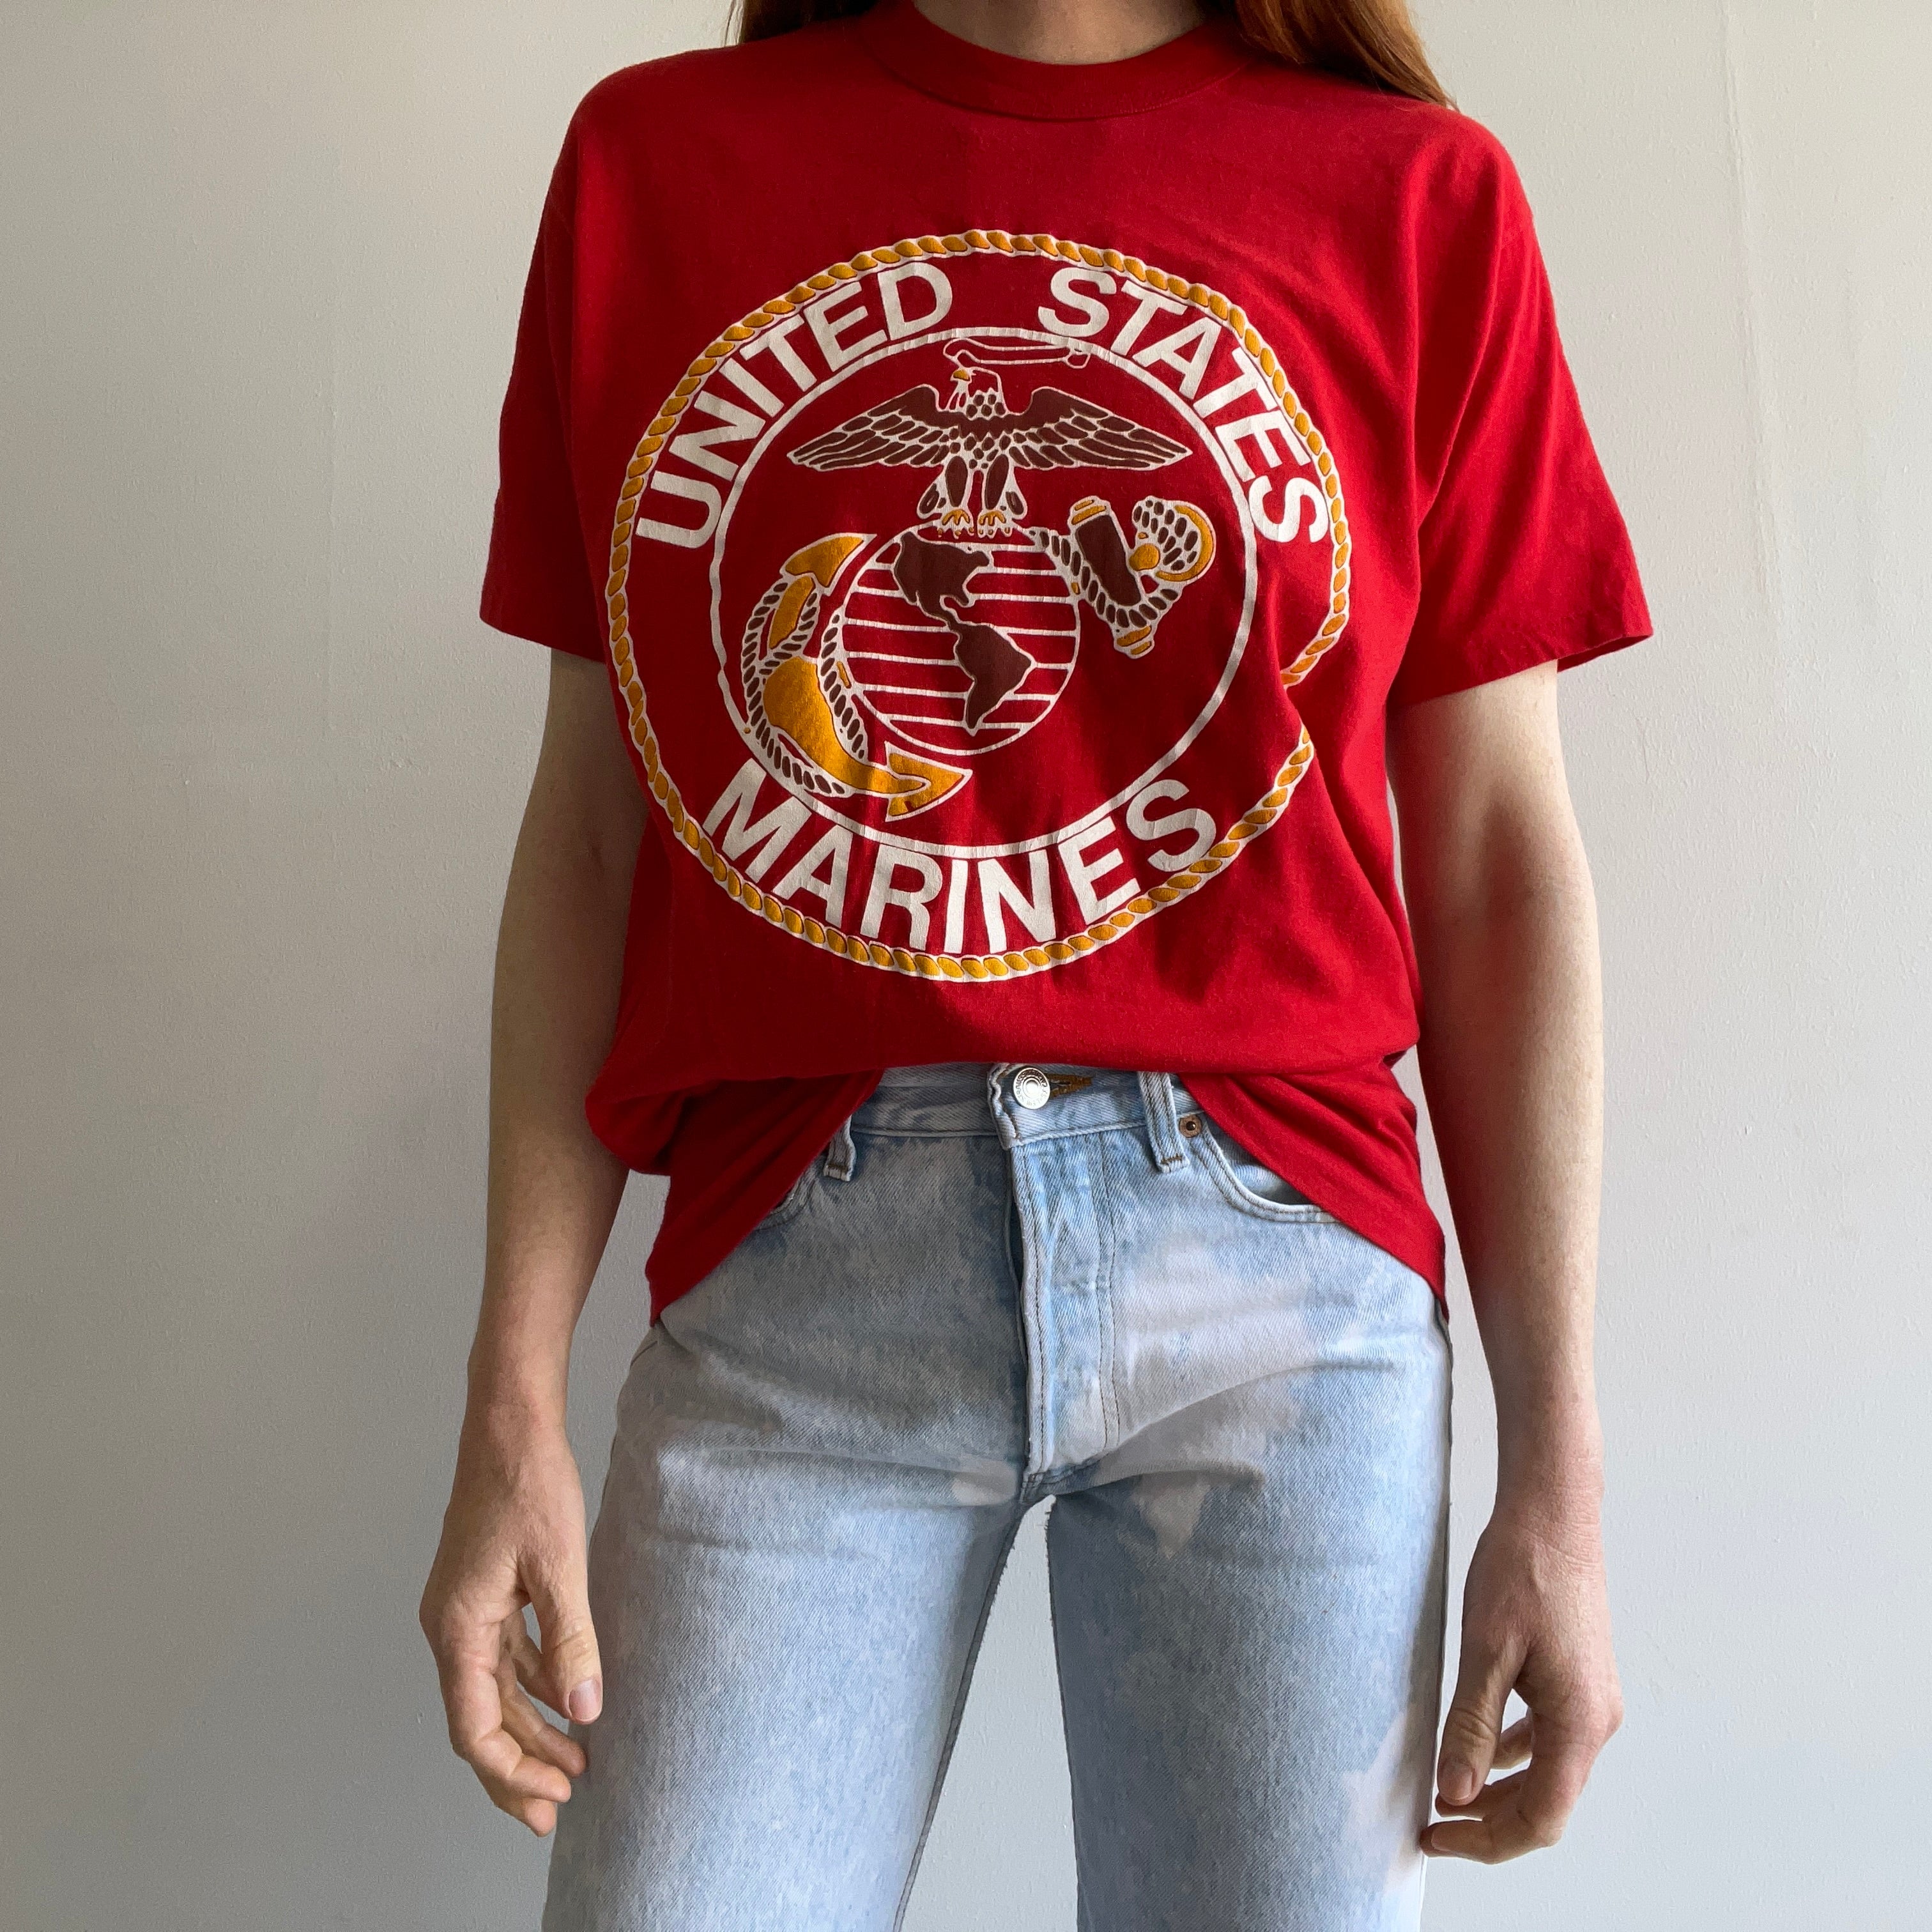 1980s United States Marines T-Shirt